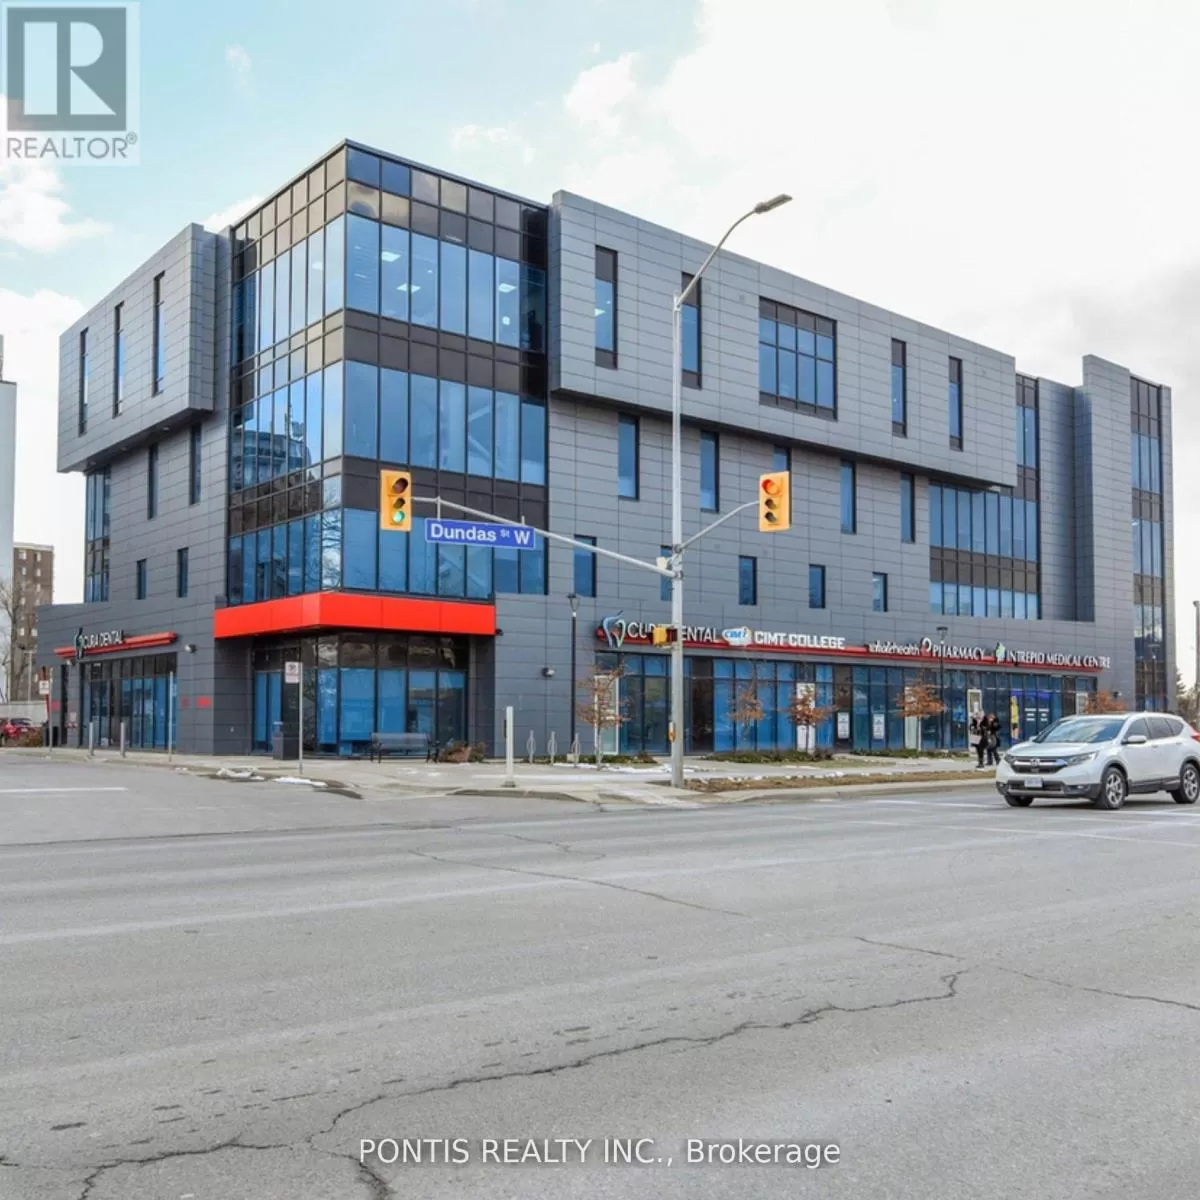 Retail for rent: 401 - 250 Dundas Street W, Mississauga, Ontario L5B 1J2